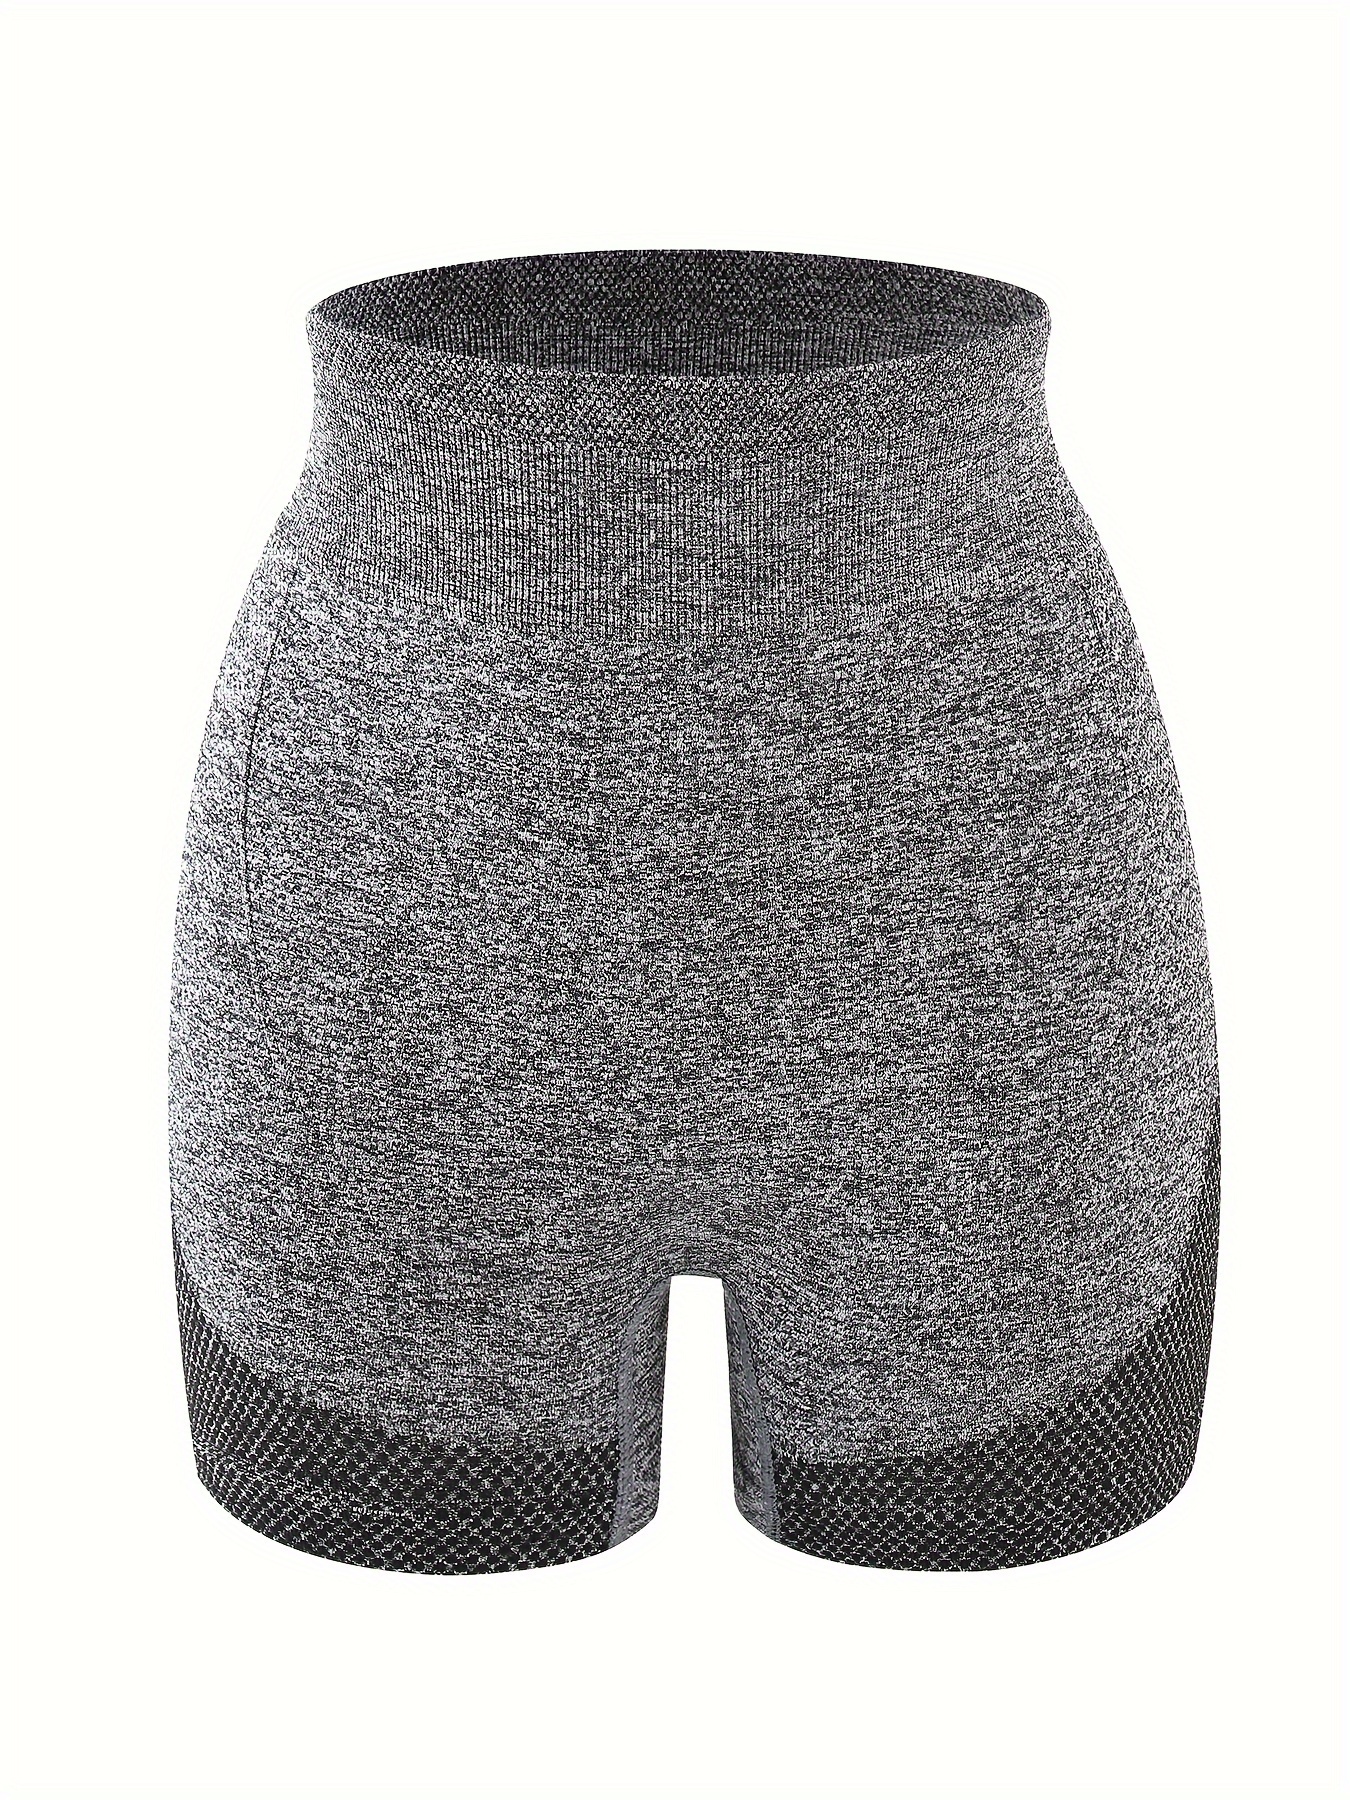 Womens Slip Shorts Comfortable Short Pants Ultra Soft Seamless Long Briefs  For Under Dresses Leggings And Yoga